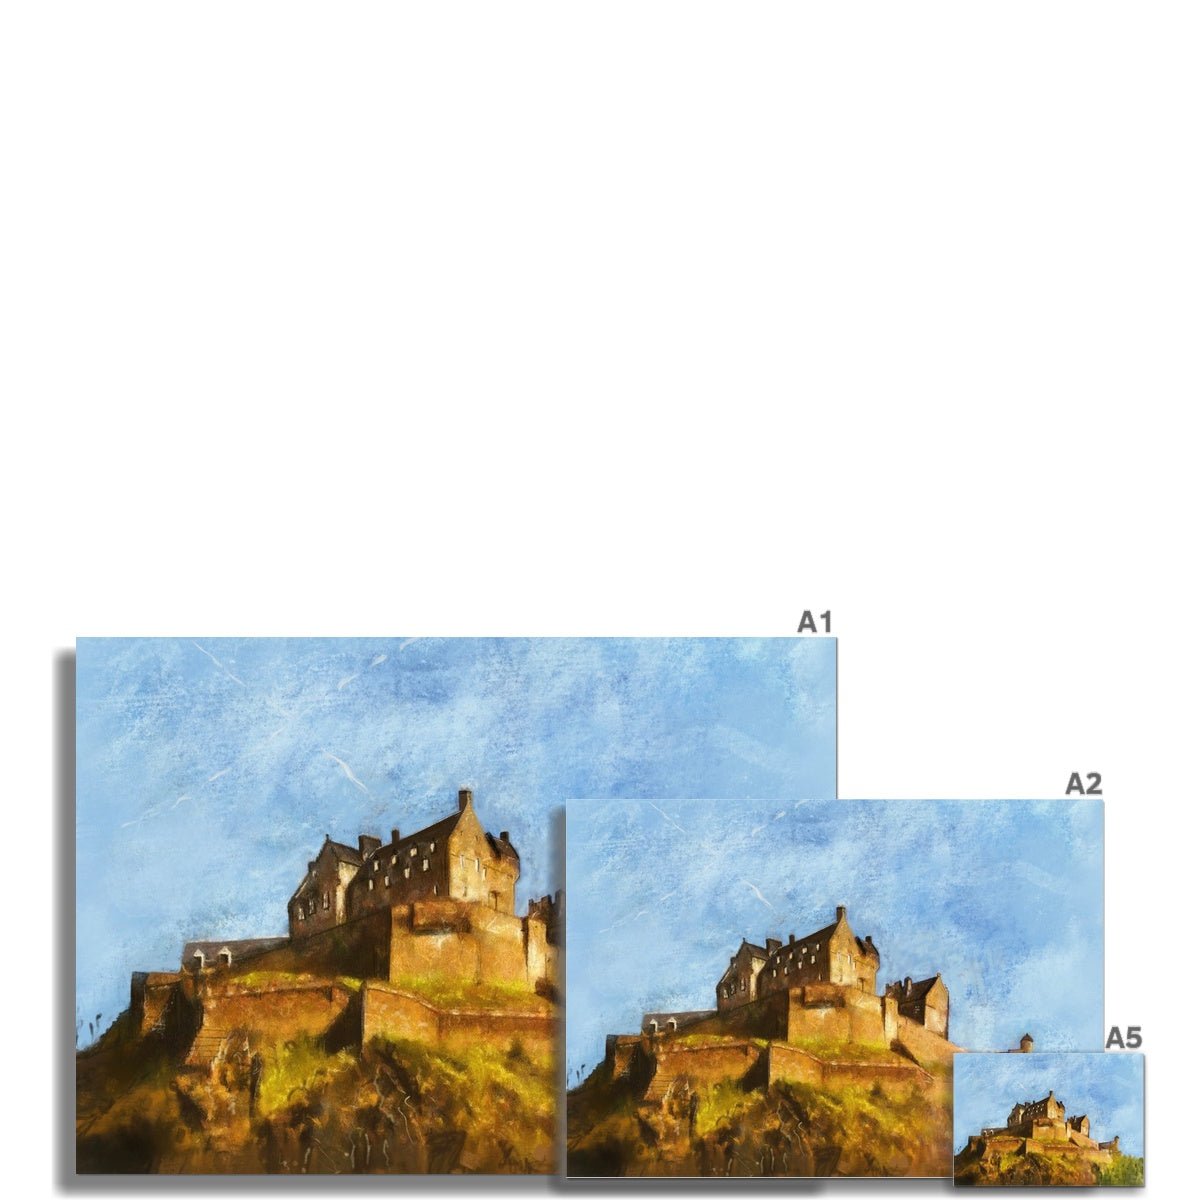 Edinburgh Castle Painting | Fine Art Prints From Scotland-Unframed Prints-Edinburgh & Glasgow Art Gallery-Paintings, Prints, Homeware, Art Gifts From Scotland By Scottish Artist Kevin Hunter